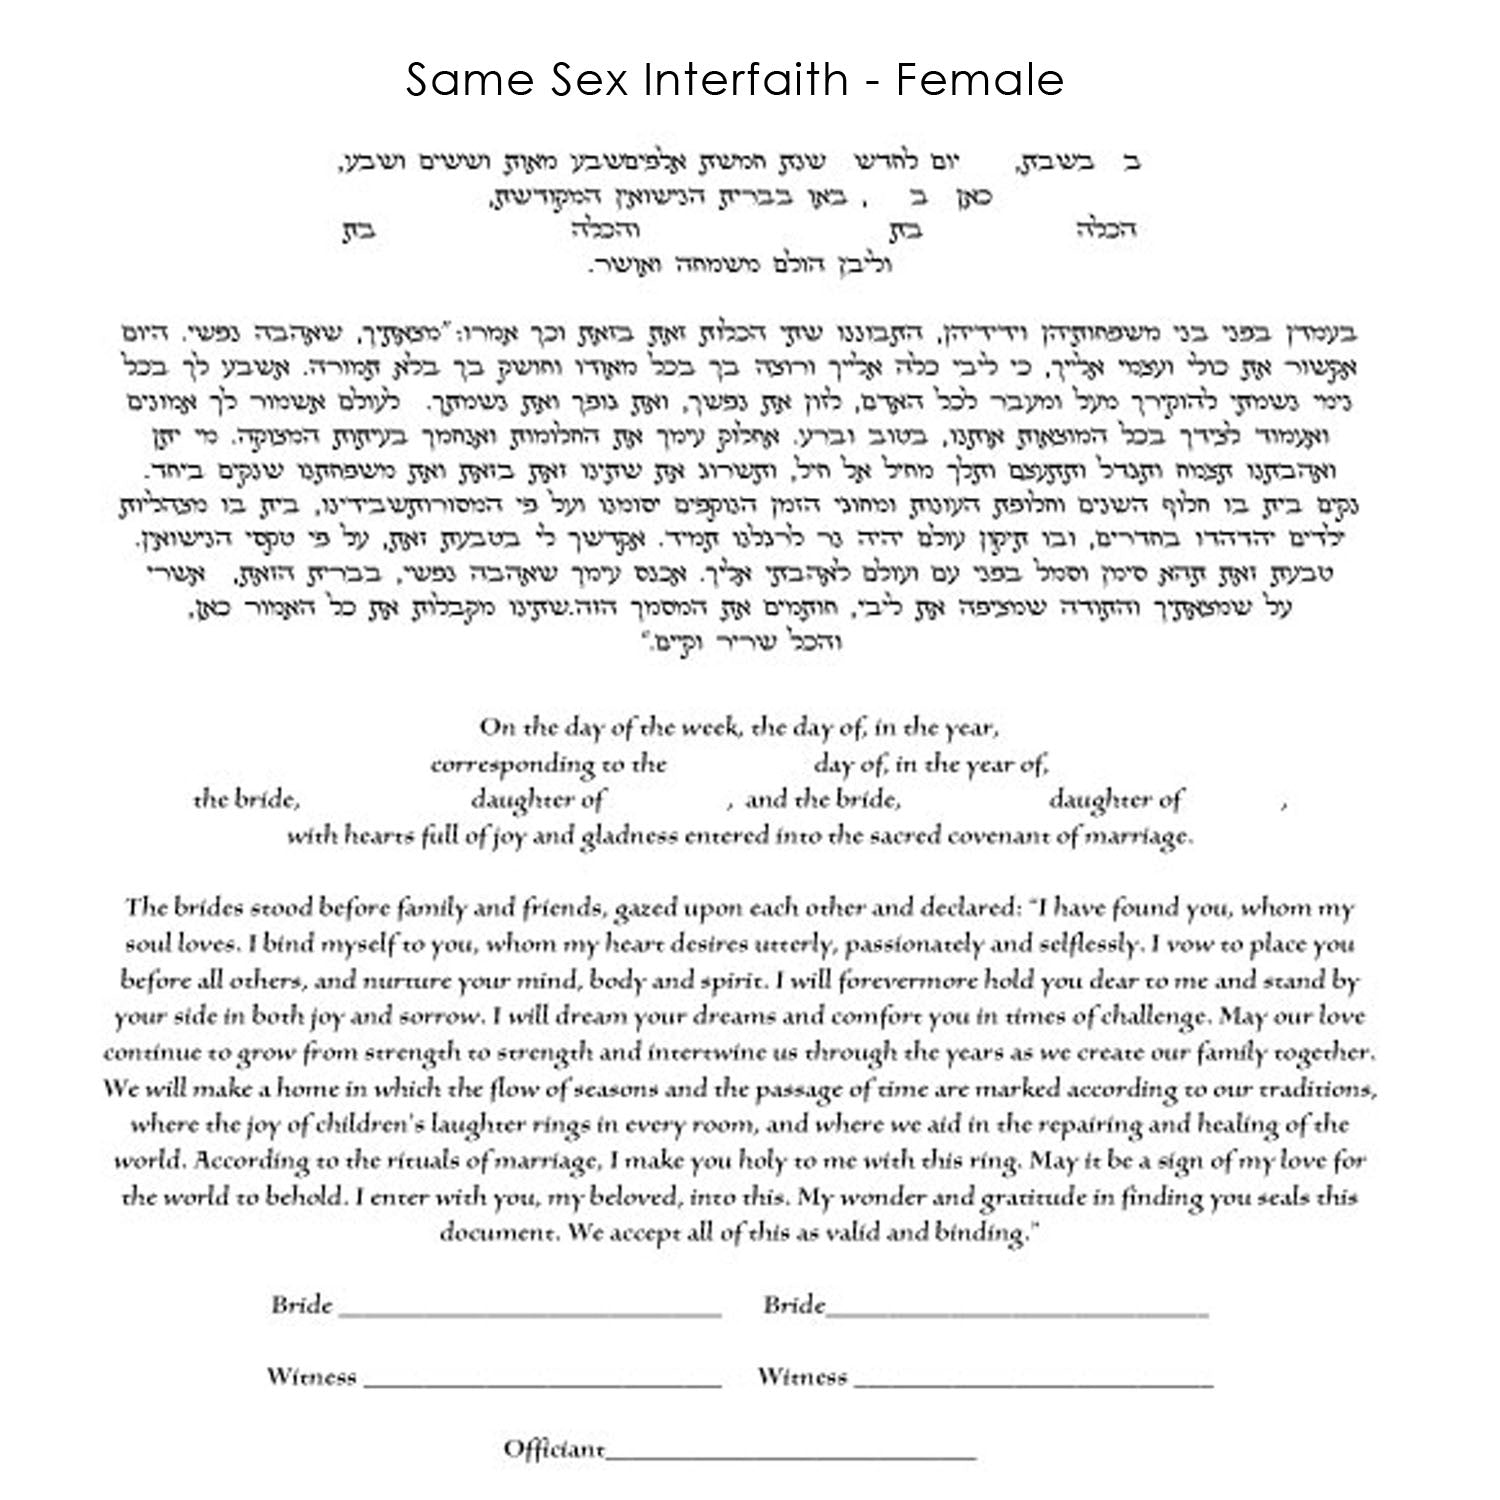 Tamara Jones - Same Sex Interfaith Female Text